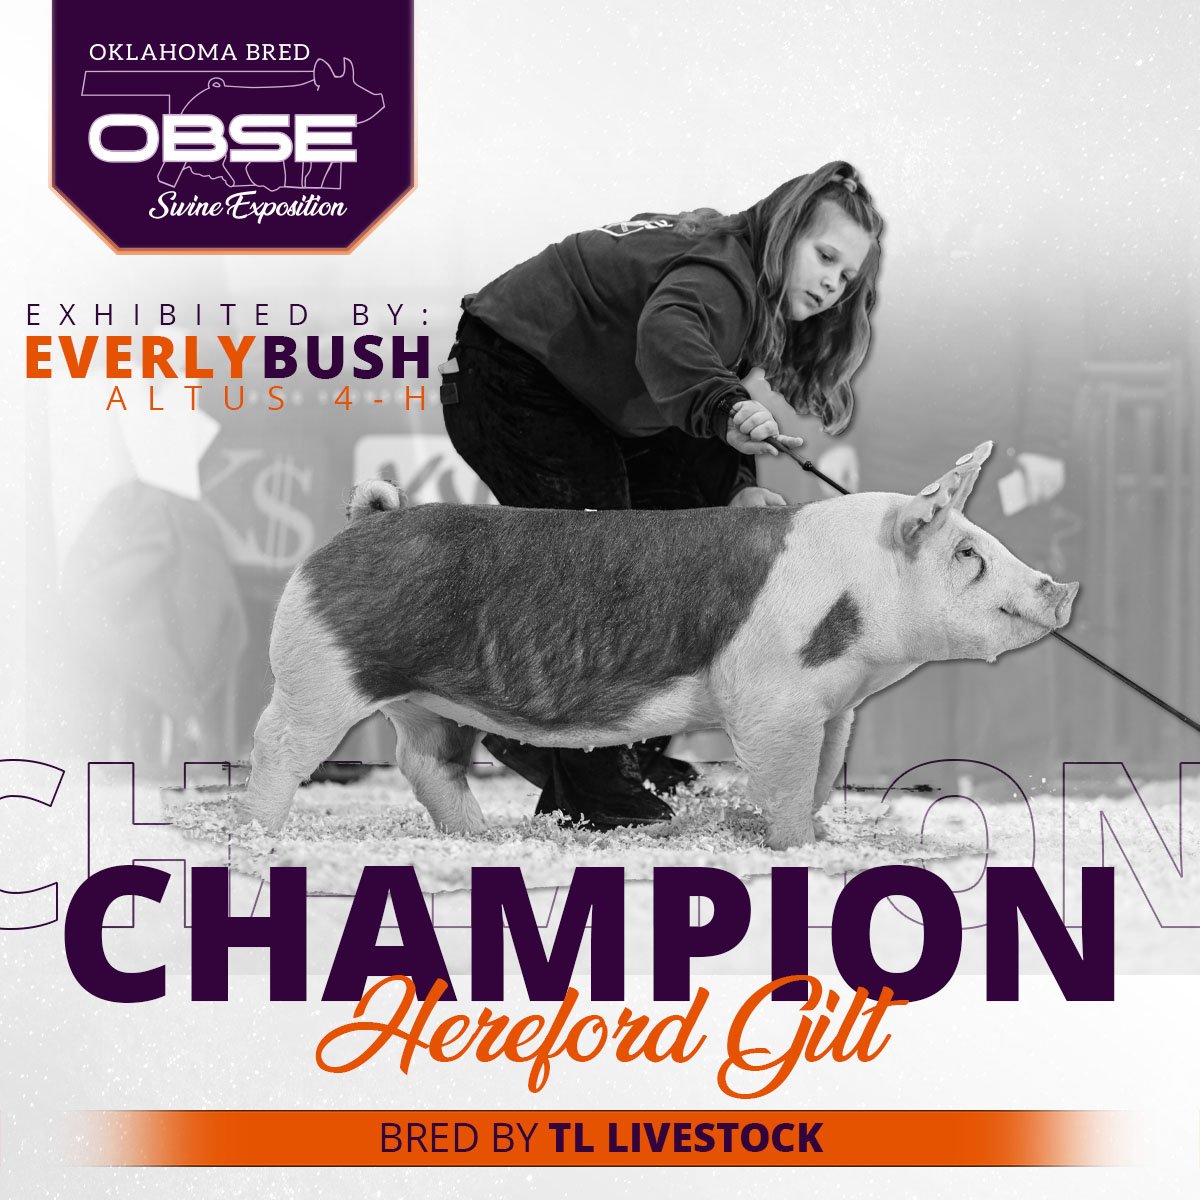 OBSE23_ChampionHereford.jpg